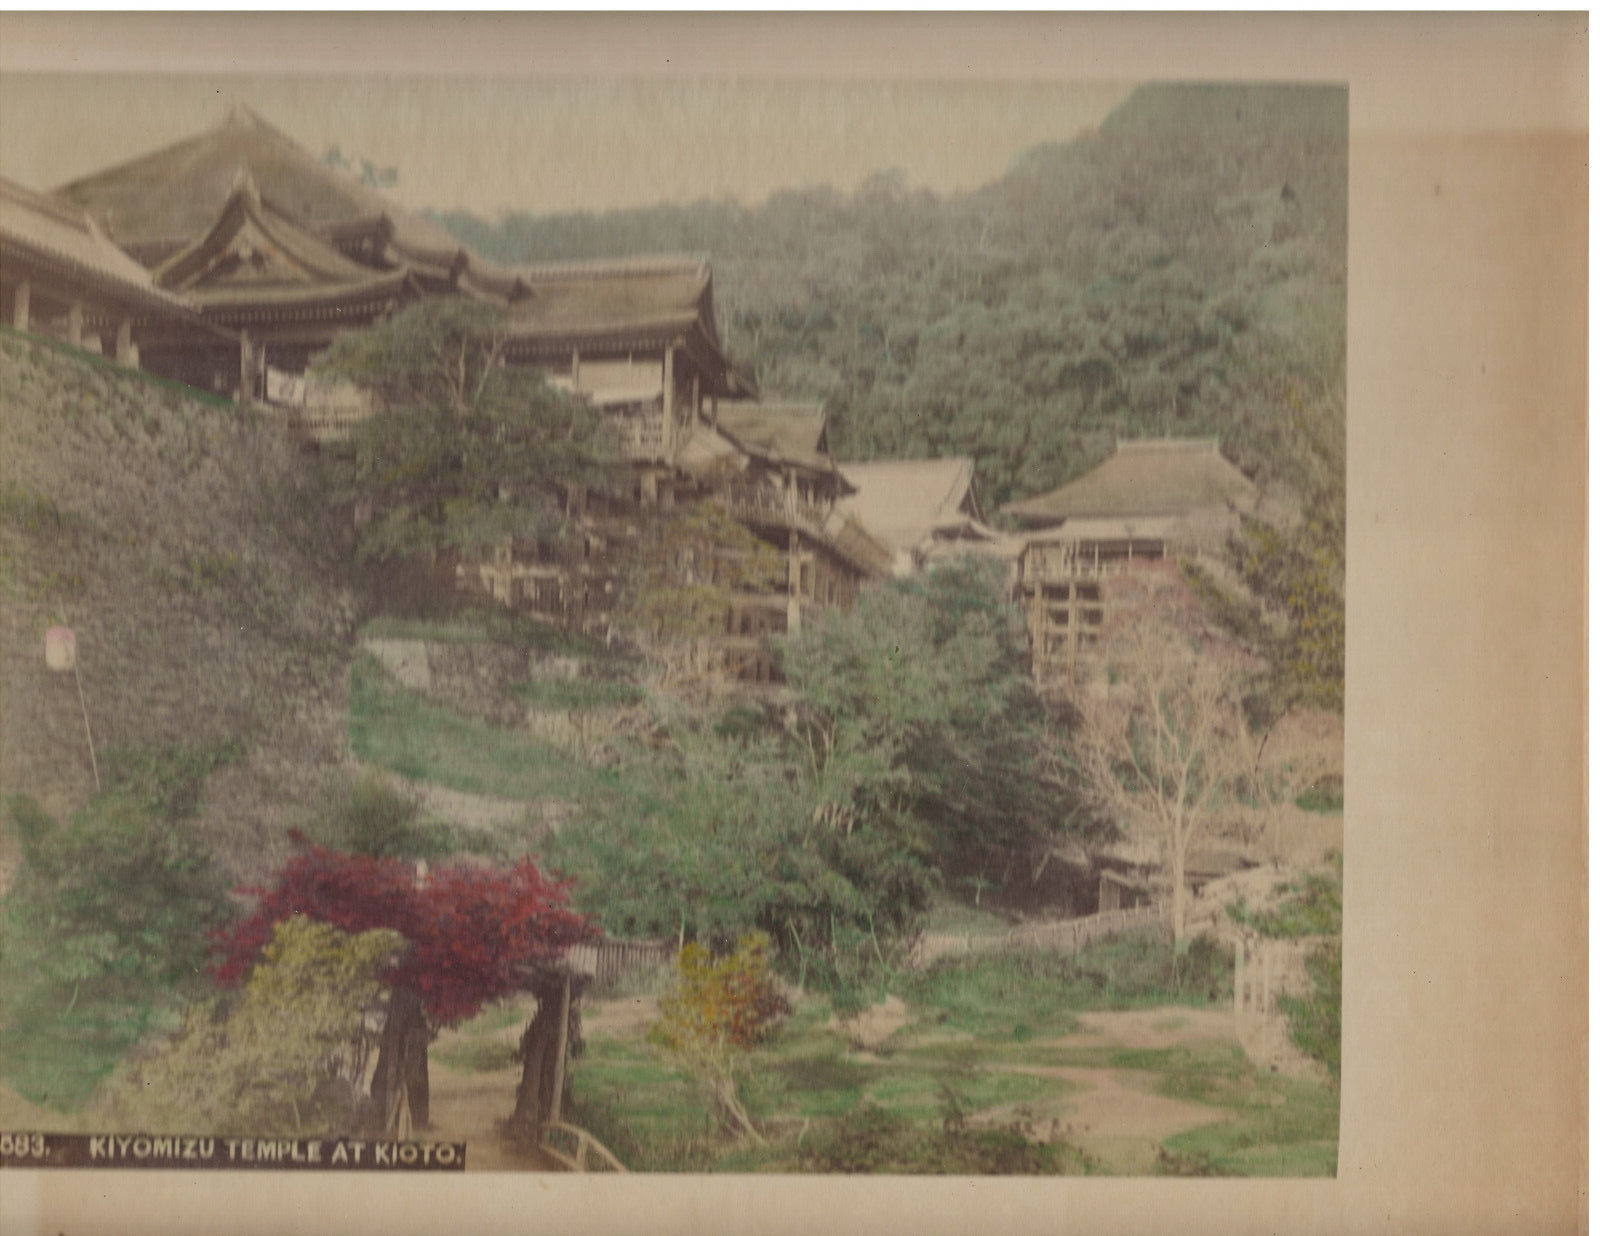 Unknwn Photographr Early hand-colored kiyomizo temple kioto/inside iyemitsu temp